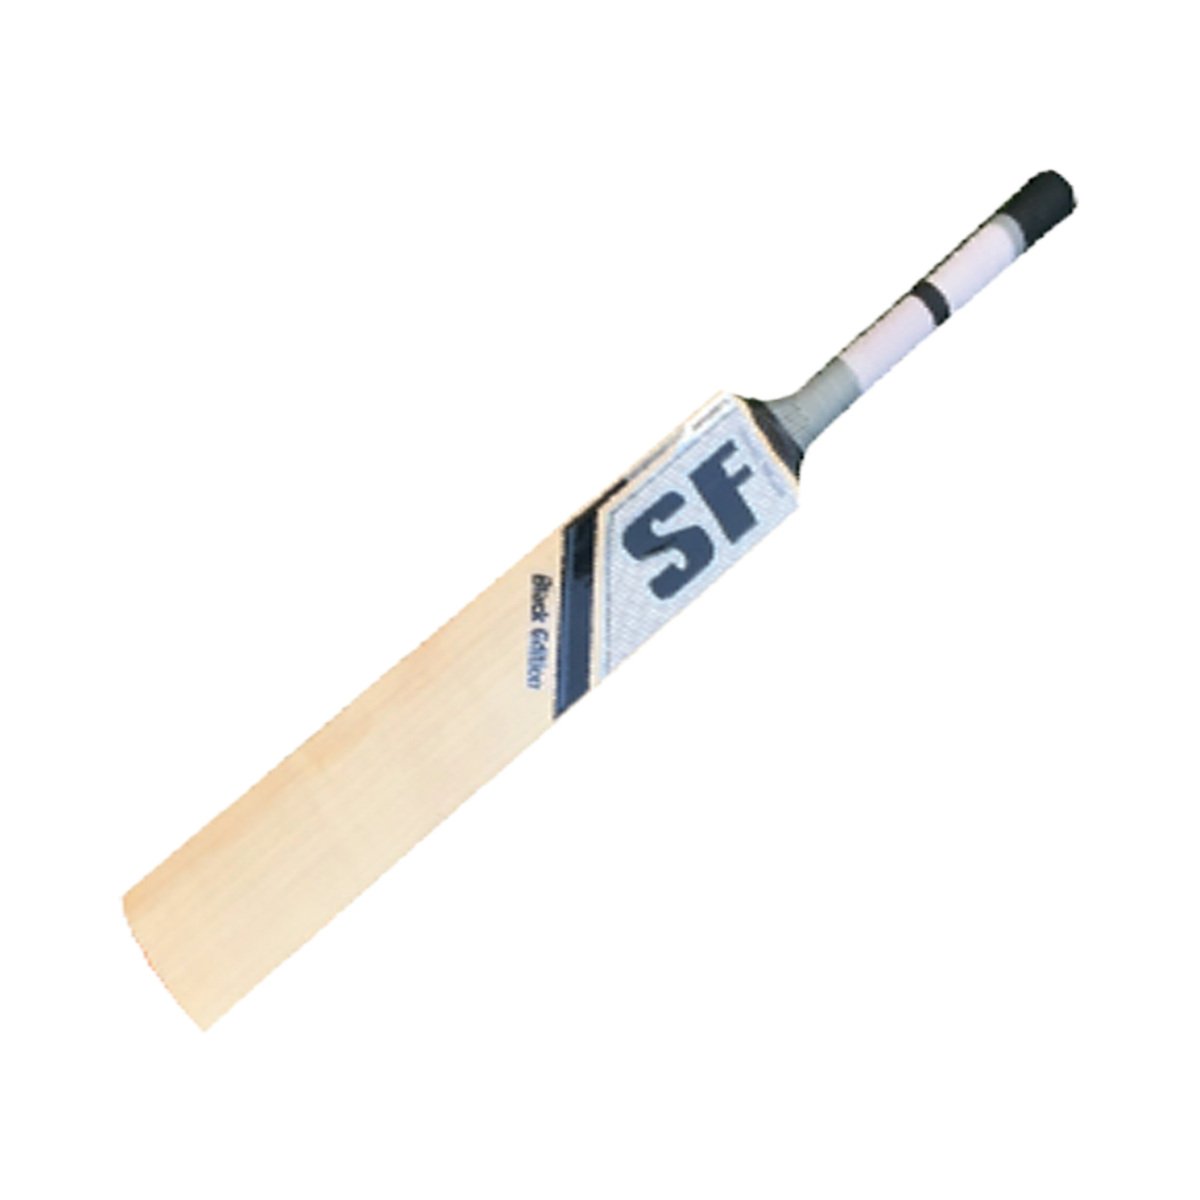 Cricket Bat English Wilow SP4031